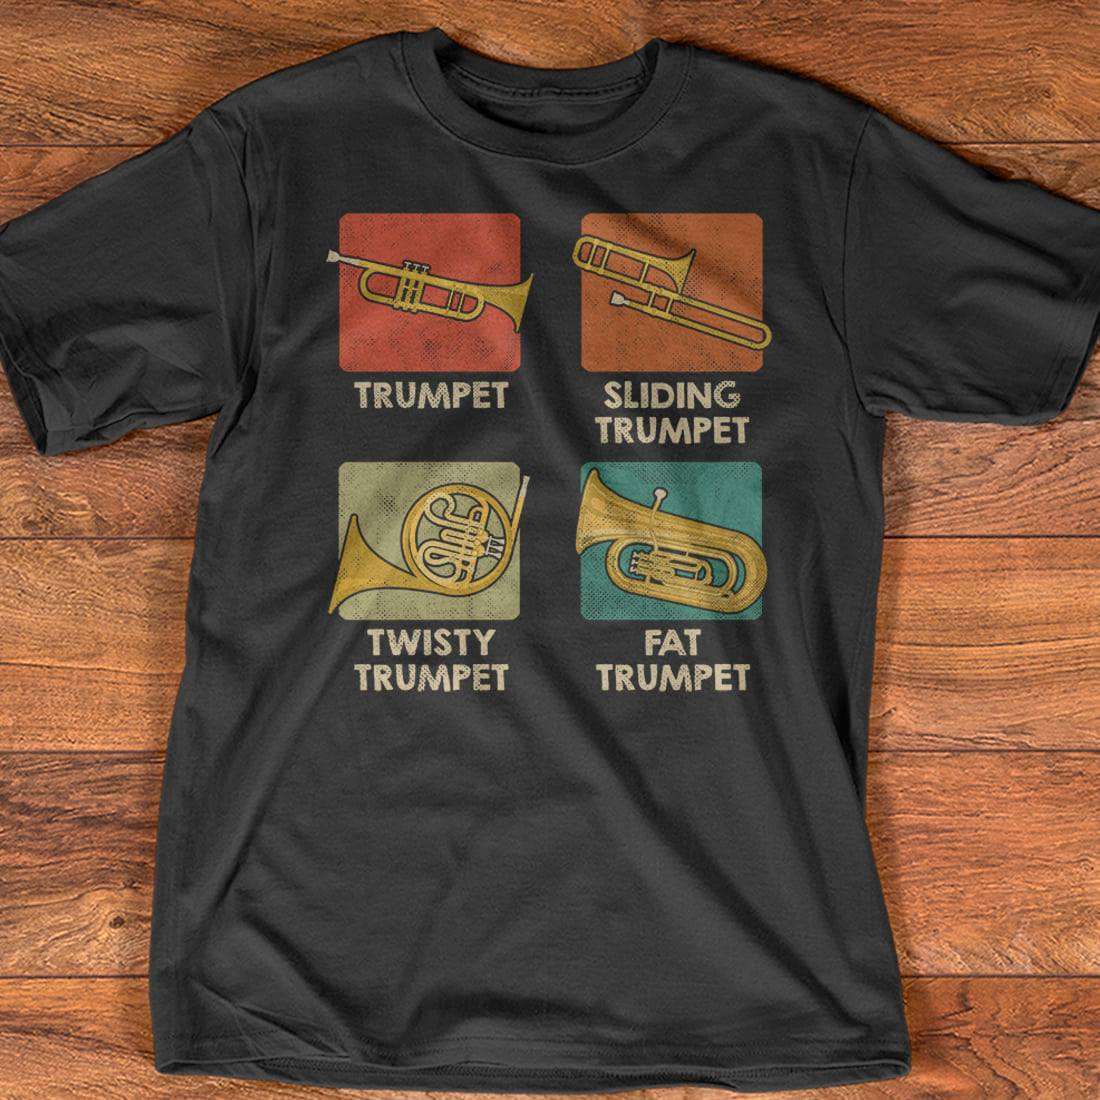 Trumpet, sliding trumpet, twisty trumpet, fat trumpet - Trumpet the instrument